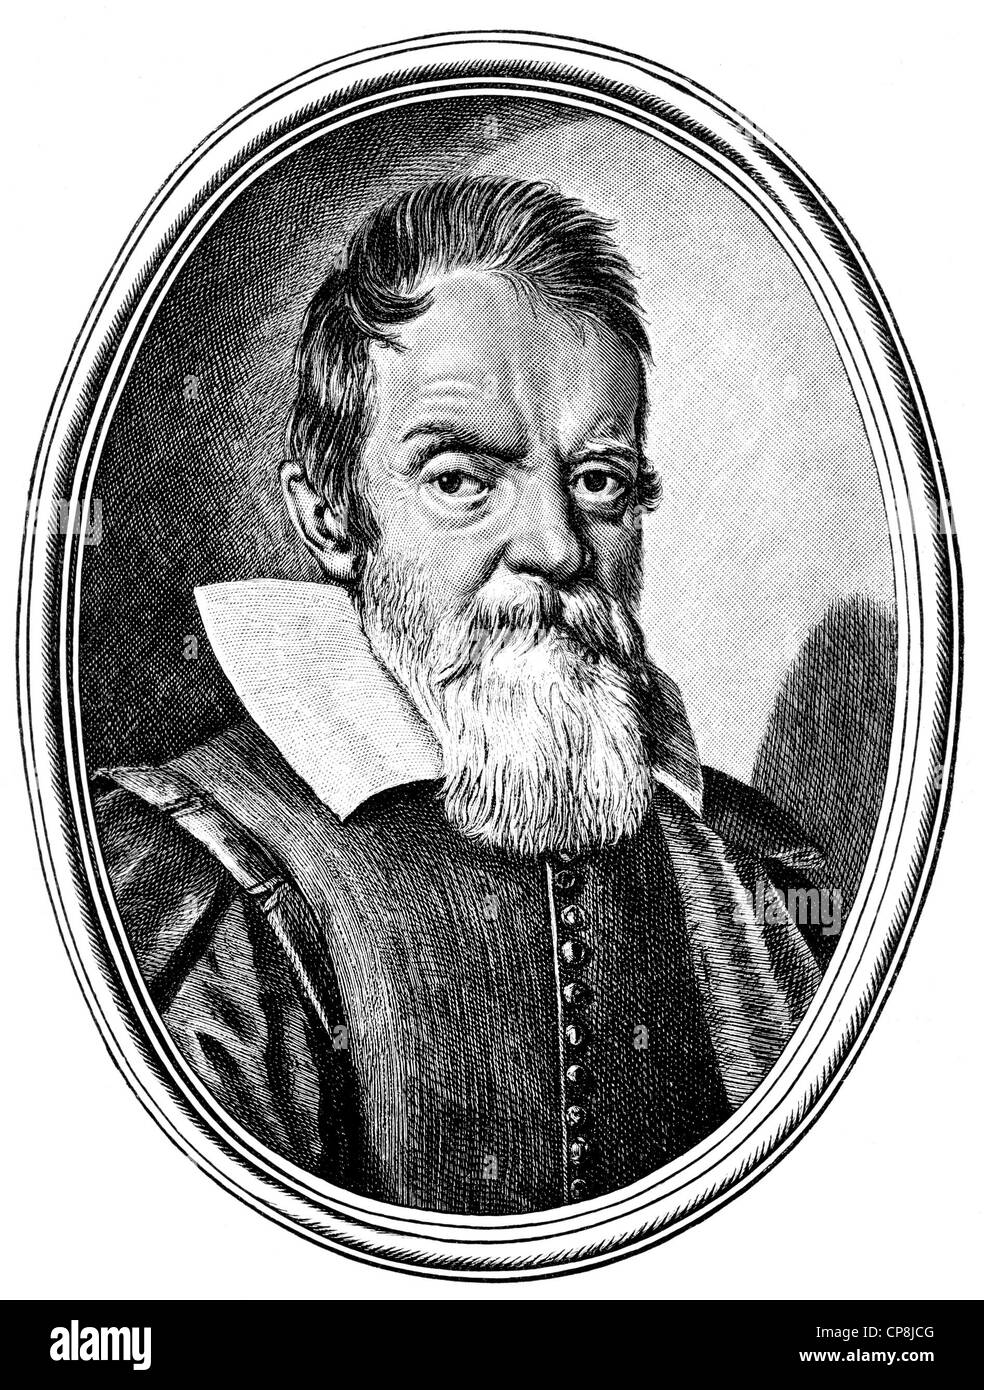 portrait of Galileo Galilei, 1564 - 1642, an Italian philosopher, mathematician, physicist and astronomer, Historische Zeichnung Stock Photo